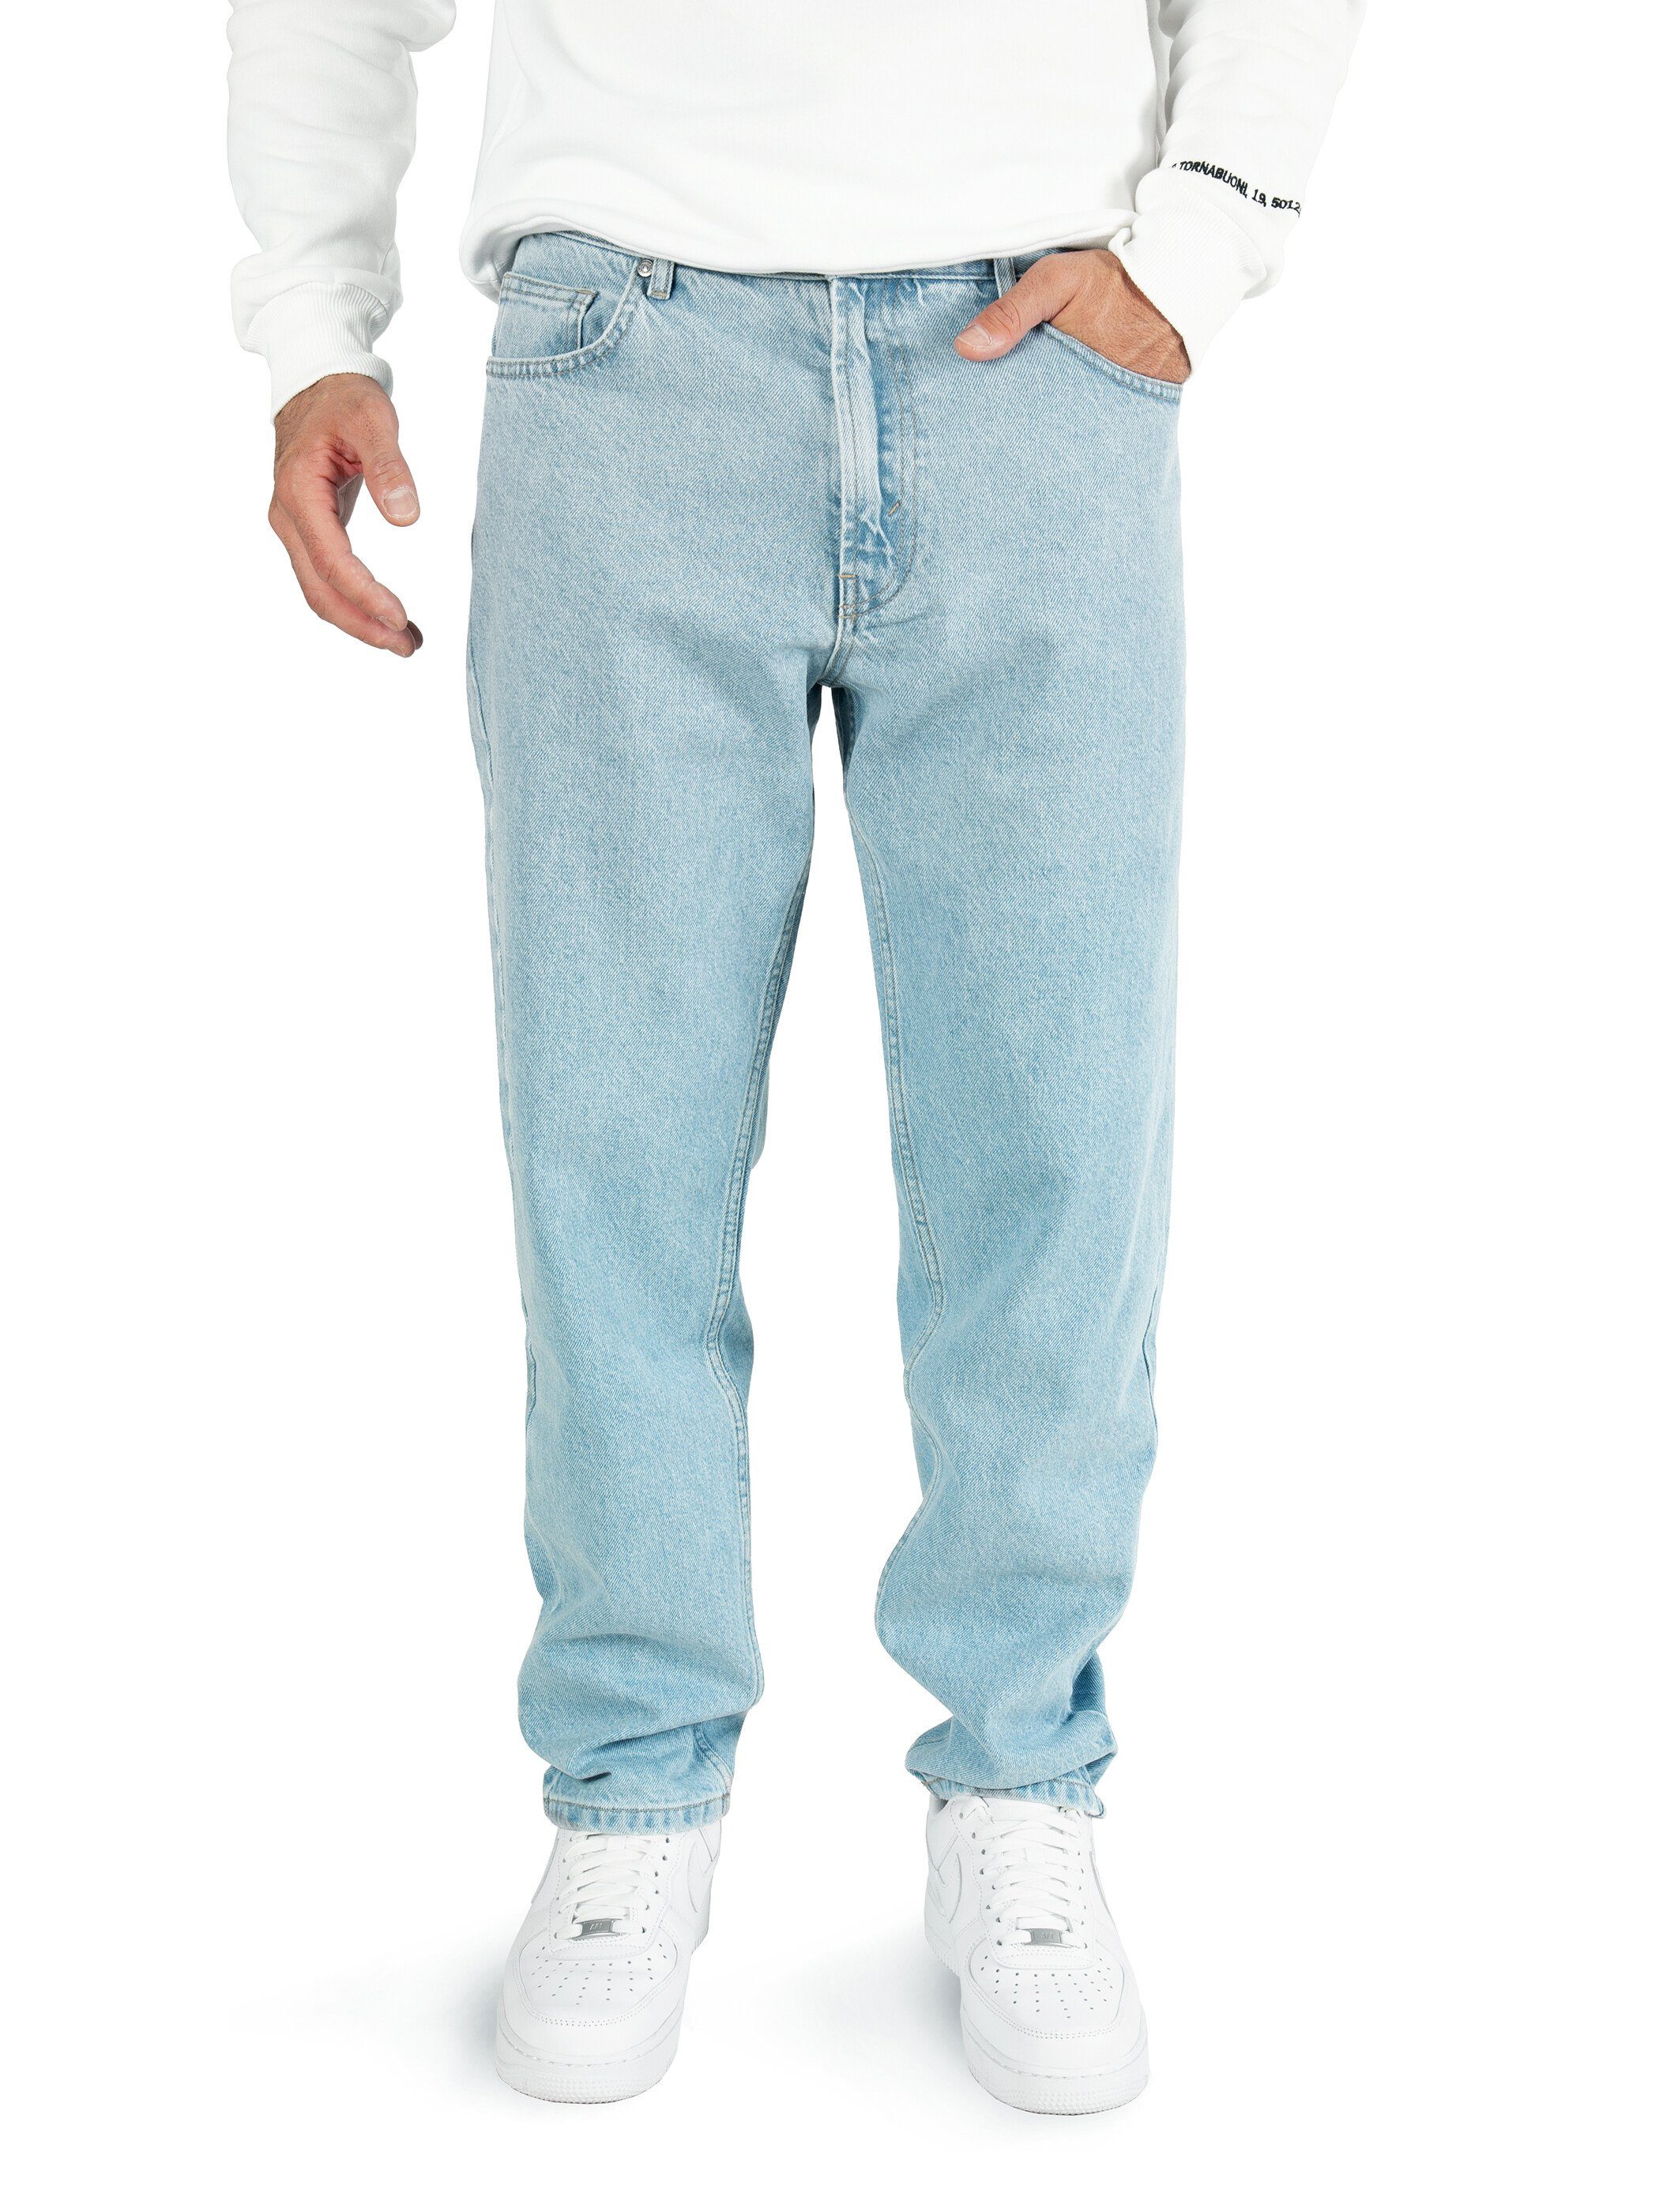 Herren Winter Jeans online kaufen » Warme Herrenjeans | OTTO